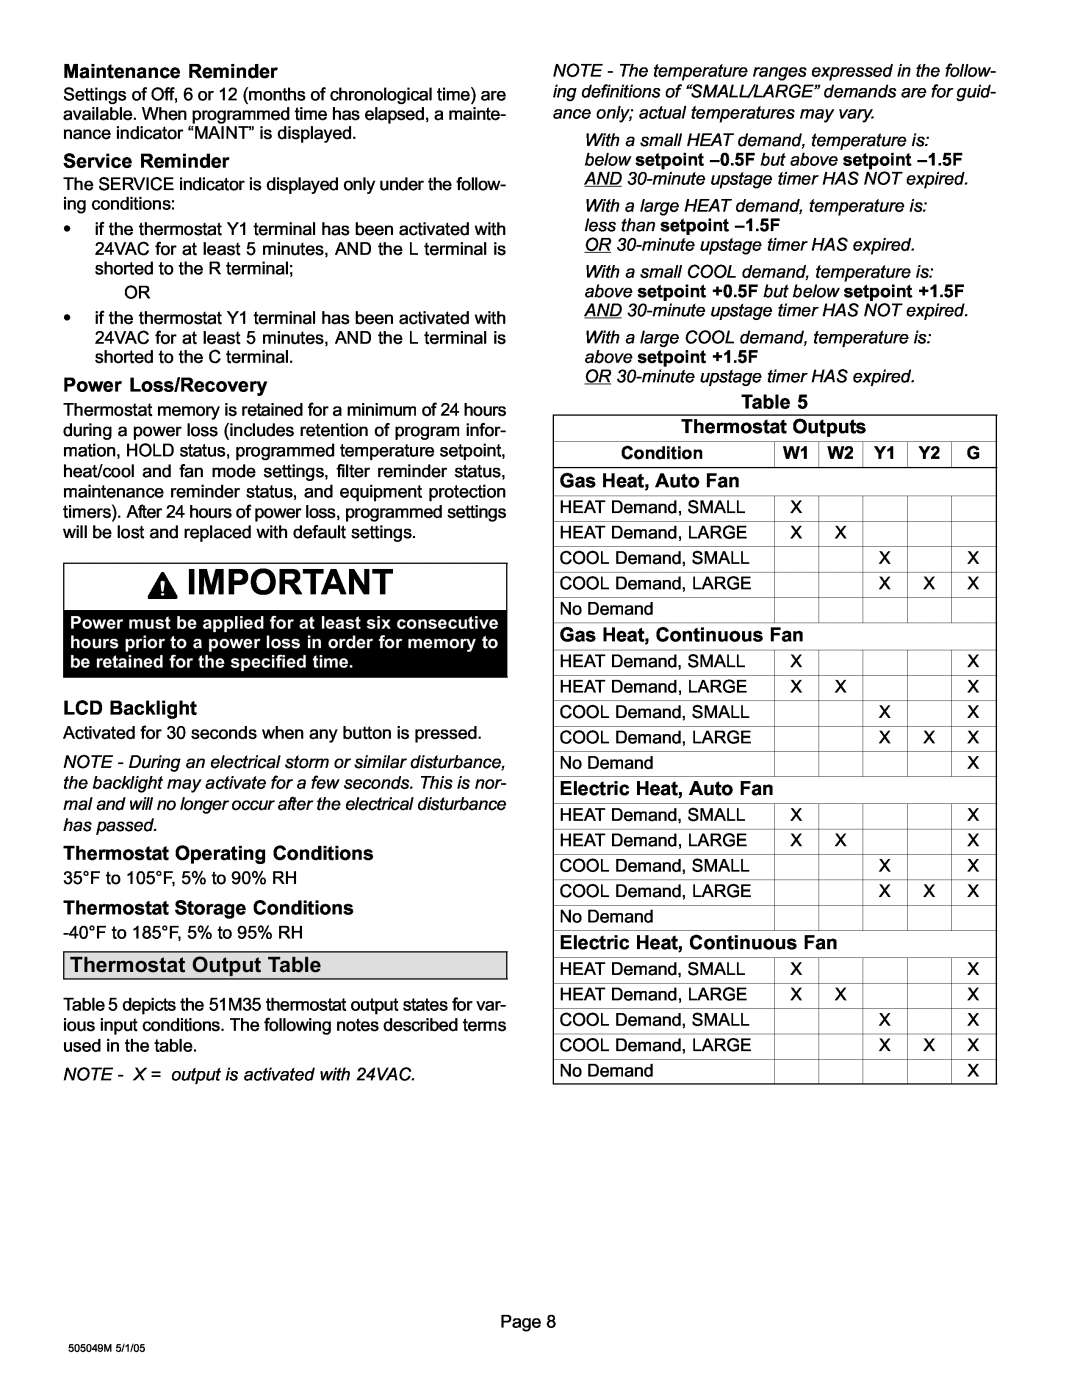 Lennox International Inc 51M37 operation manual Thermostat Output Table, Maintenance Reminder 